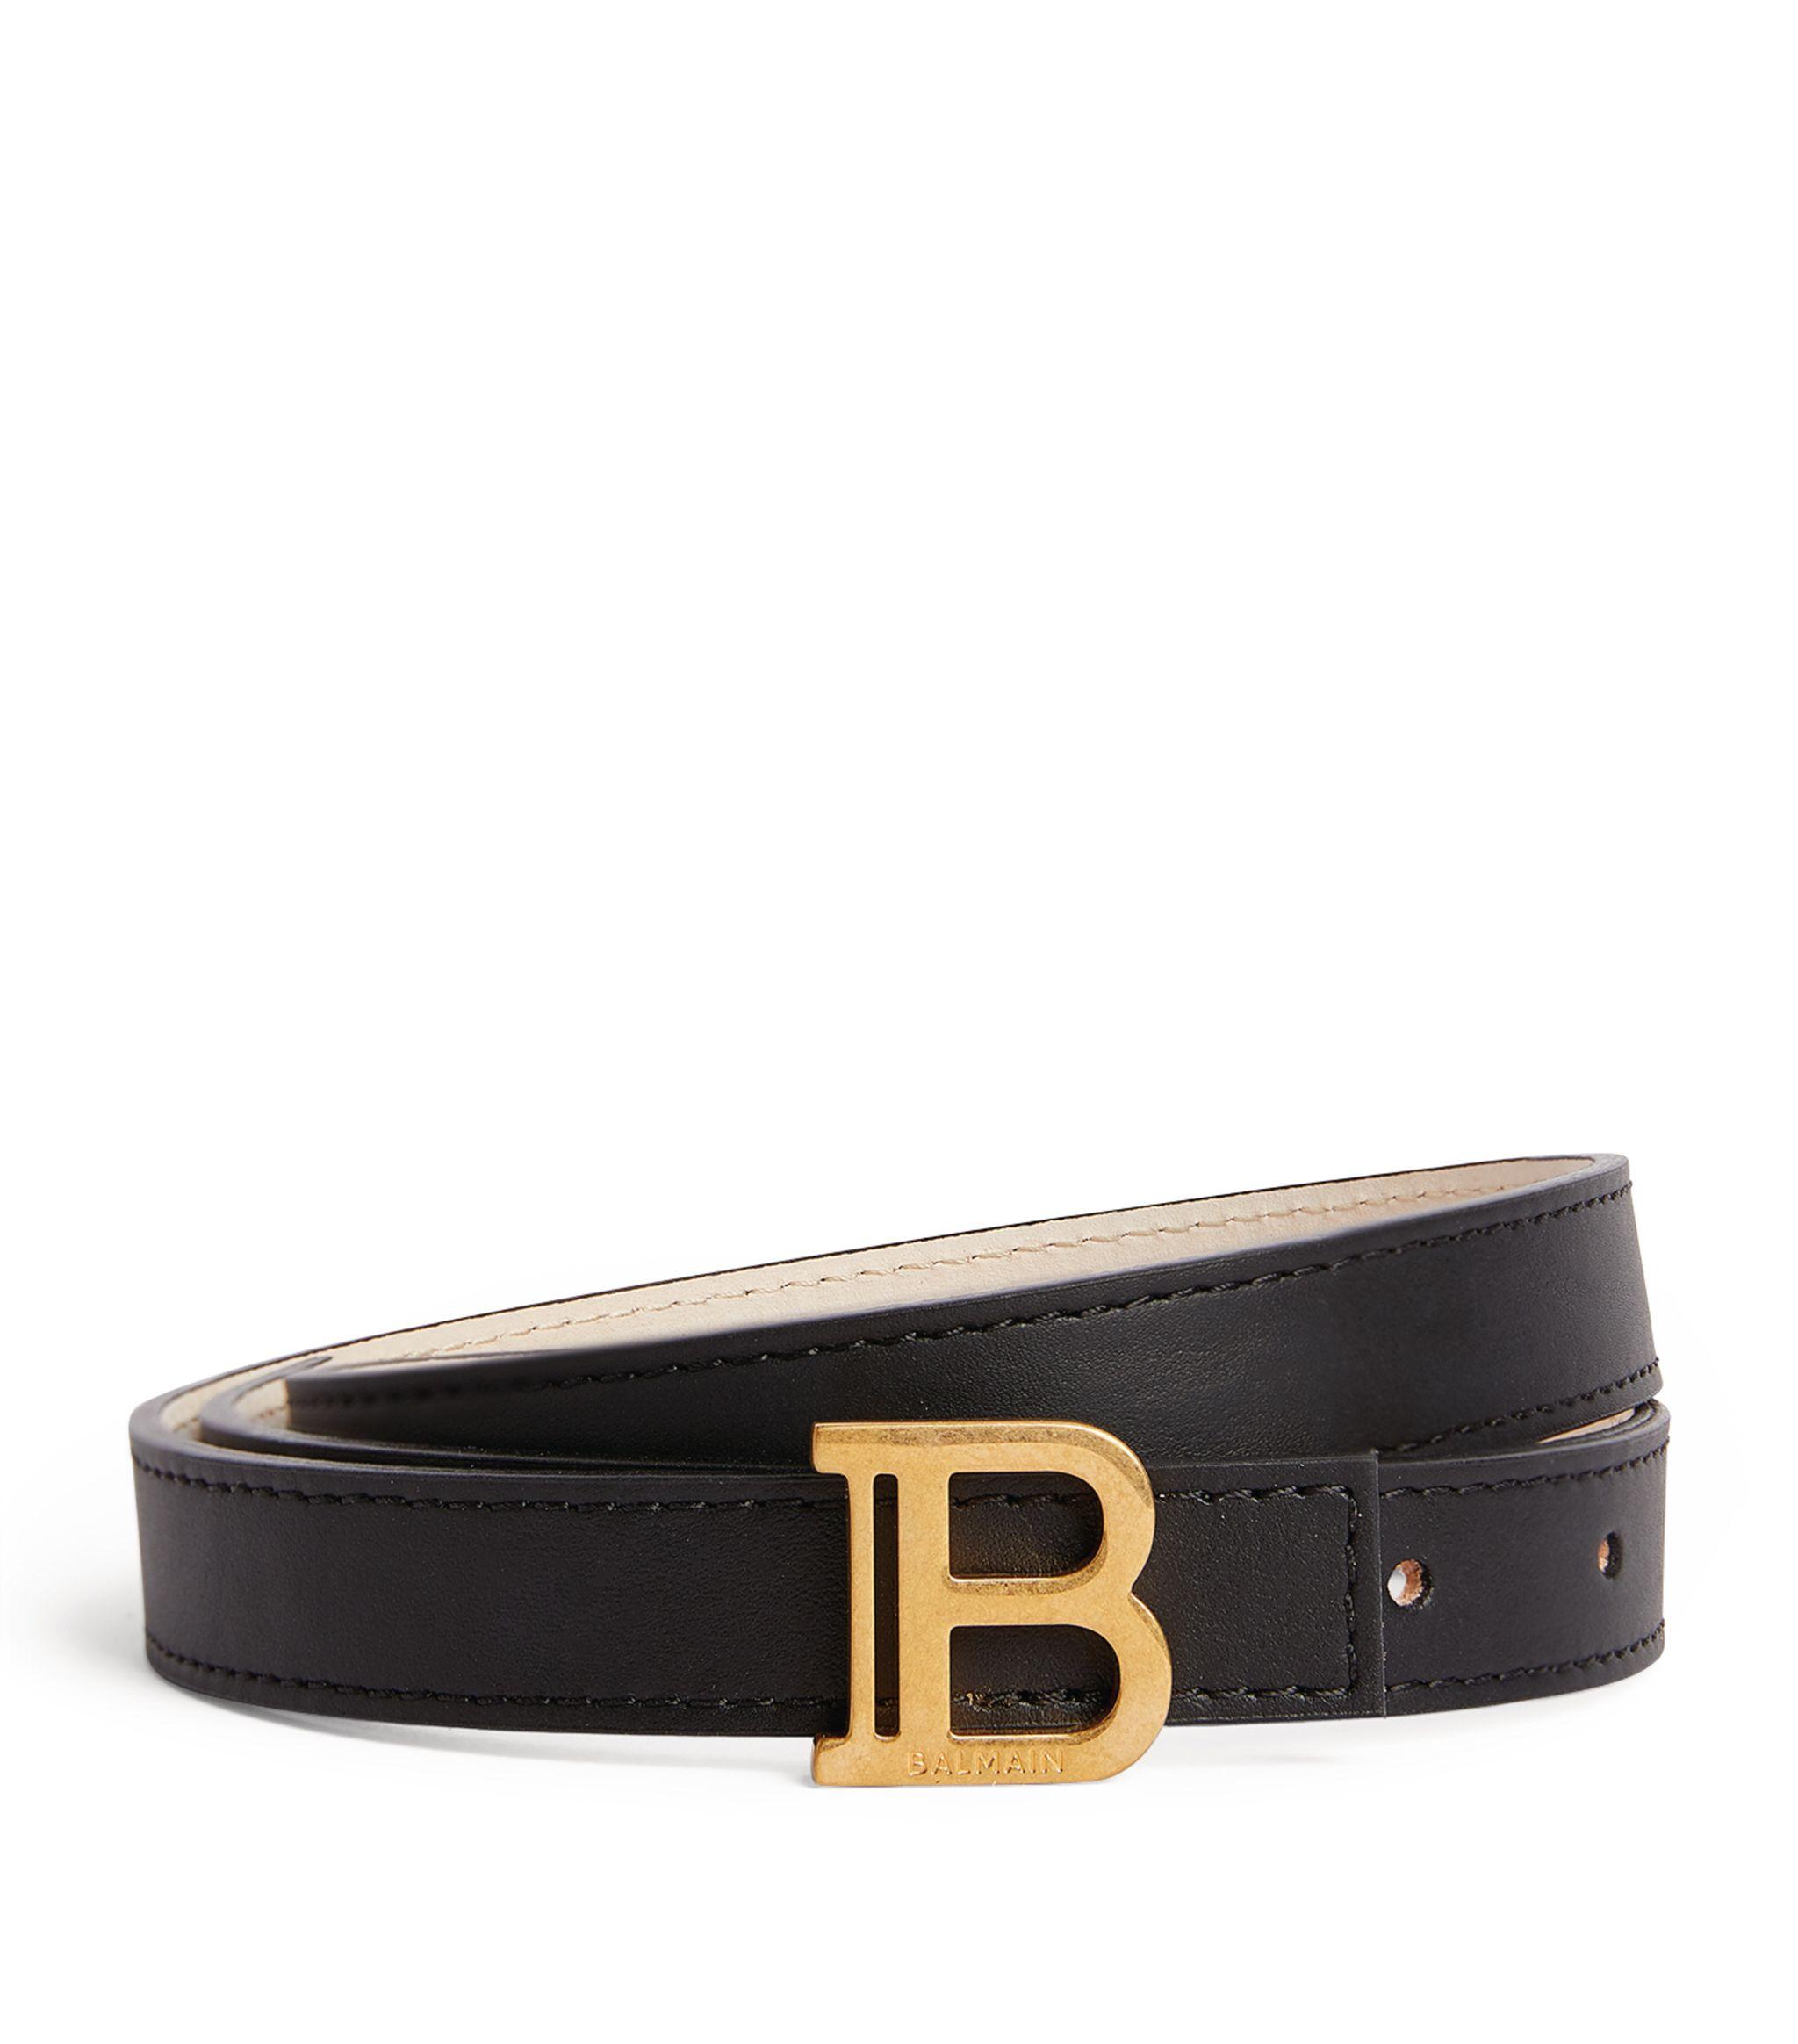 Balmain Leather Monogram Belt in Black - Lyst